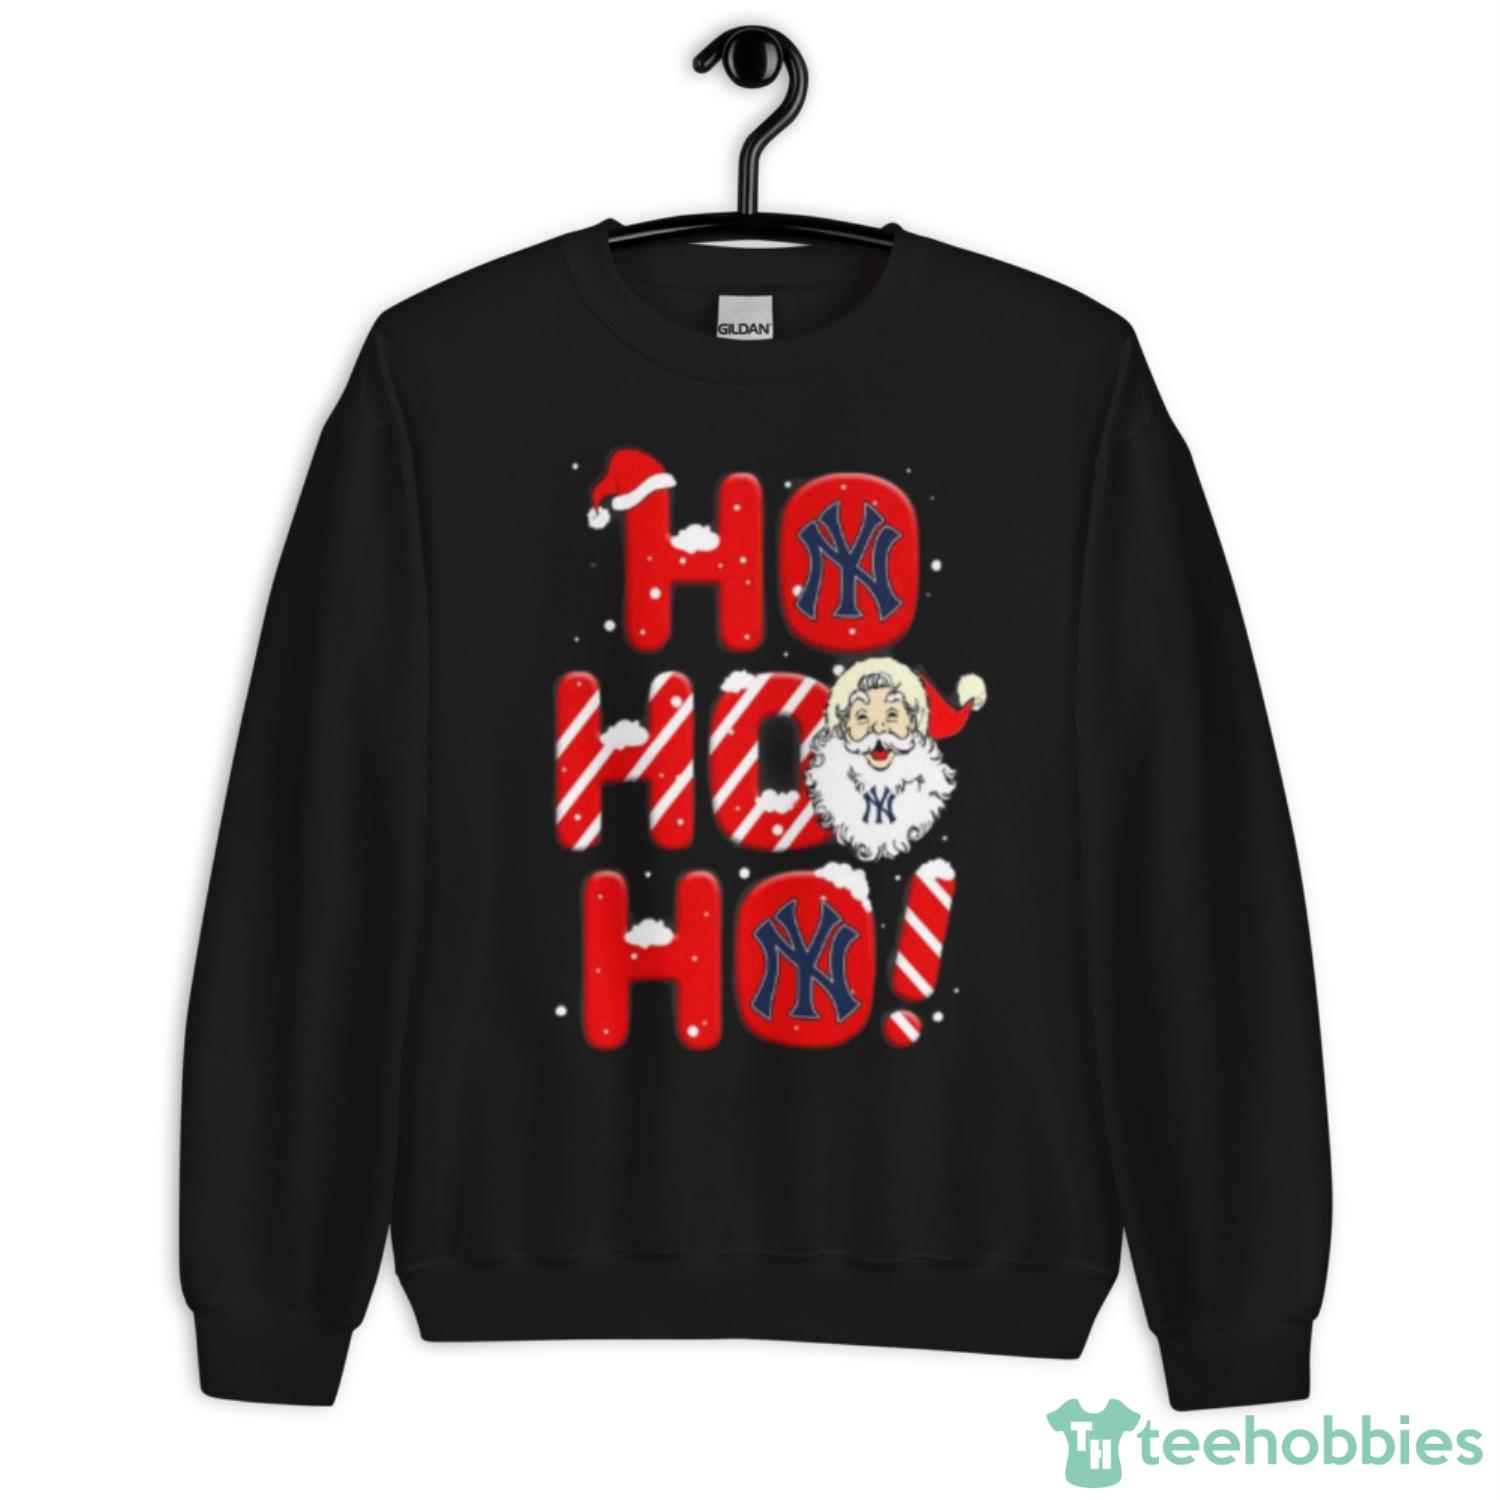 Ho HO HO York yankees Christmas shirt, hoodie, sweatshirt for men and women